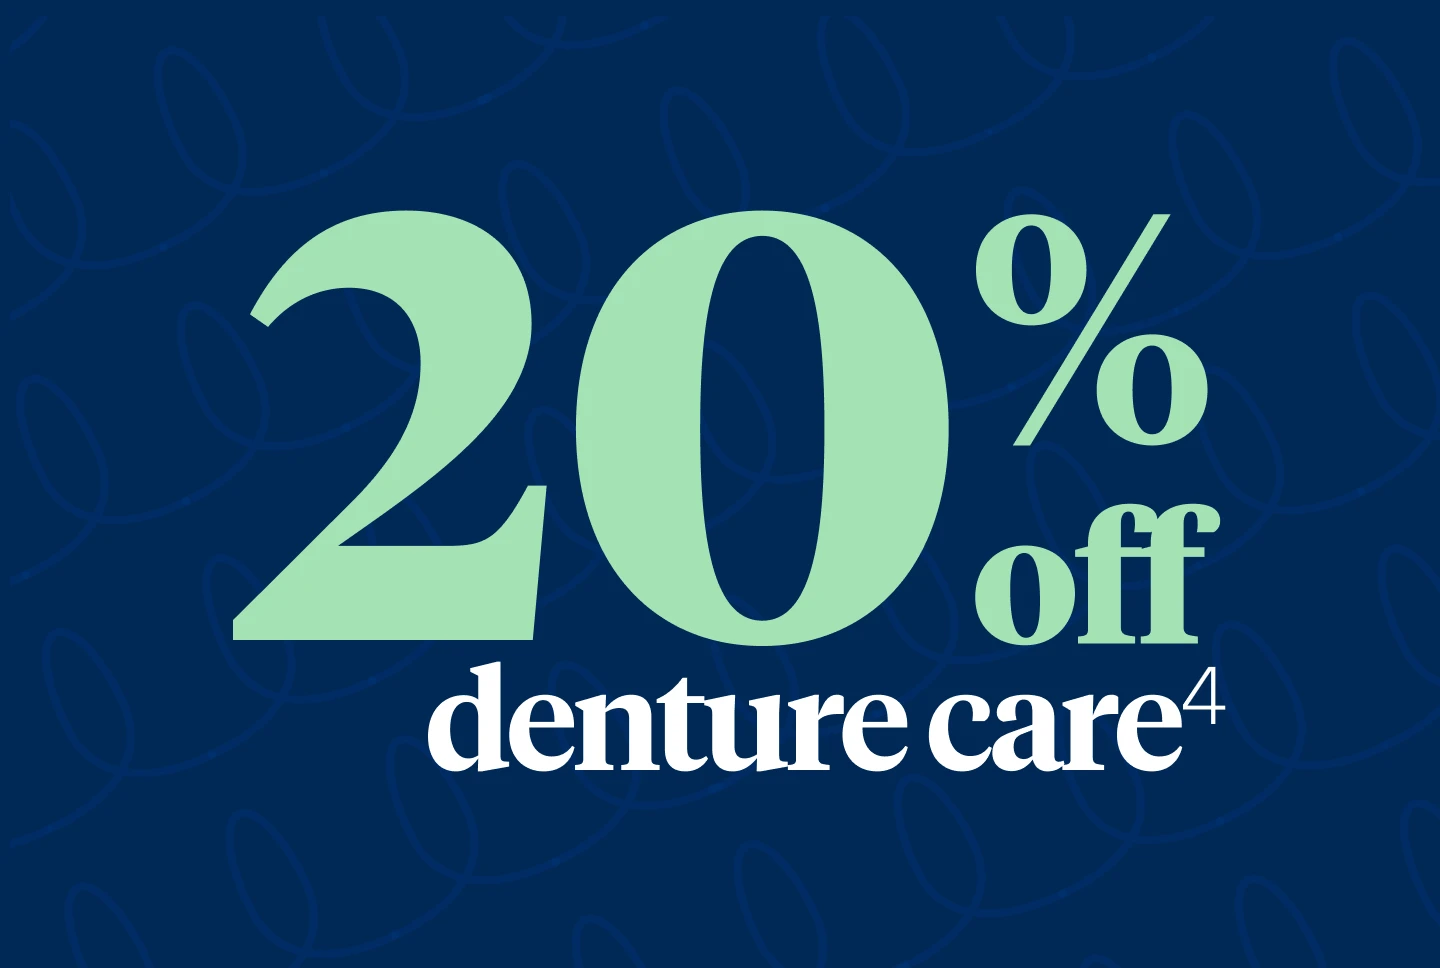 20% off denture care. 